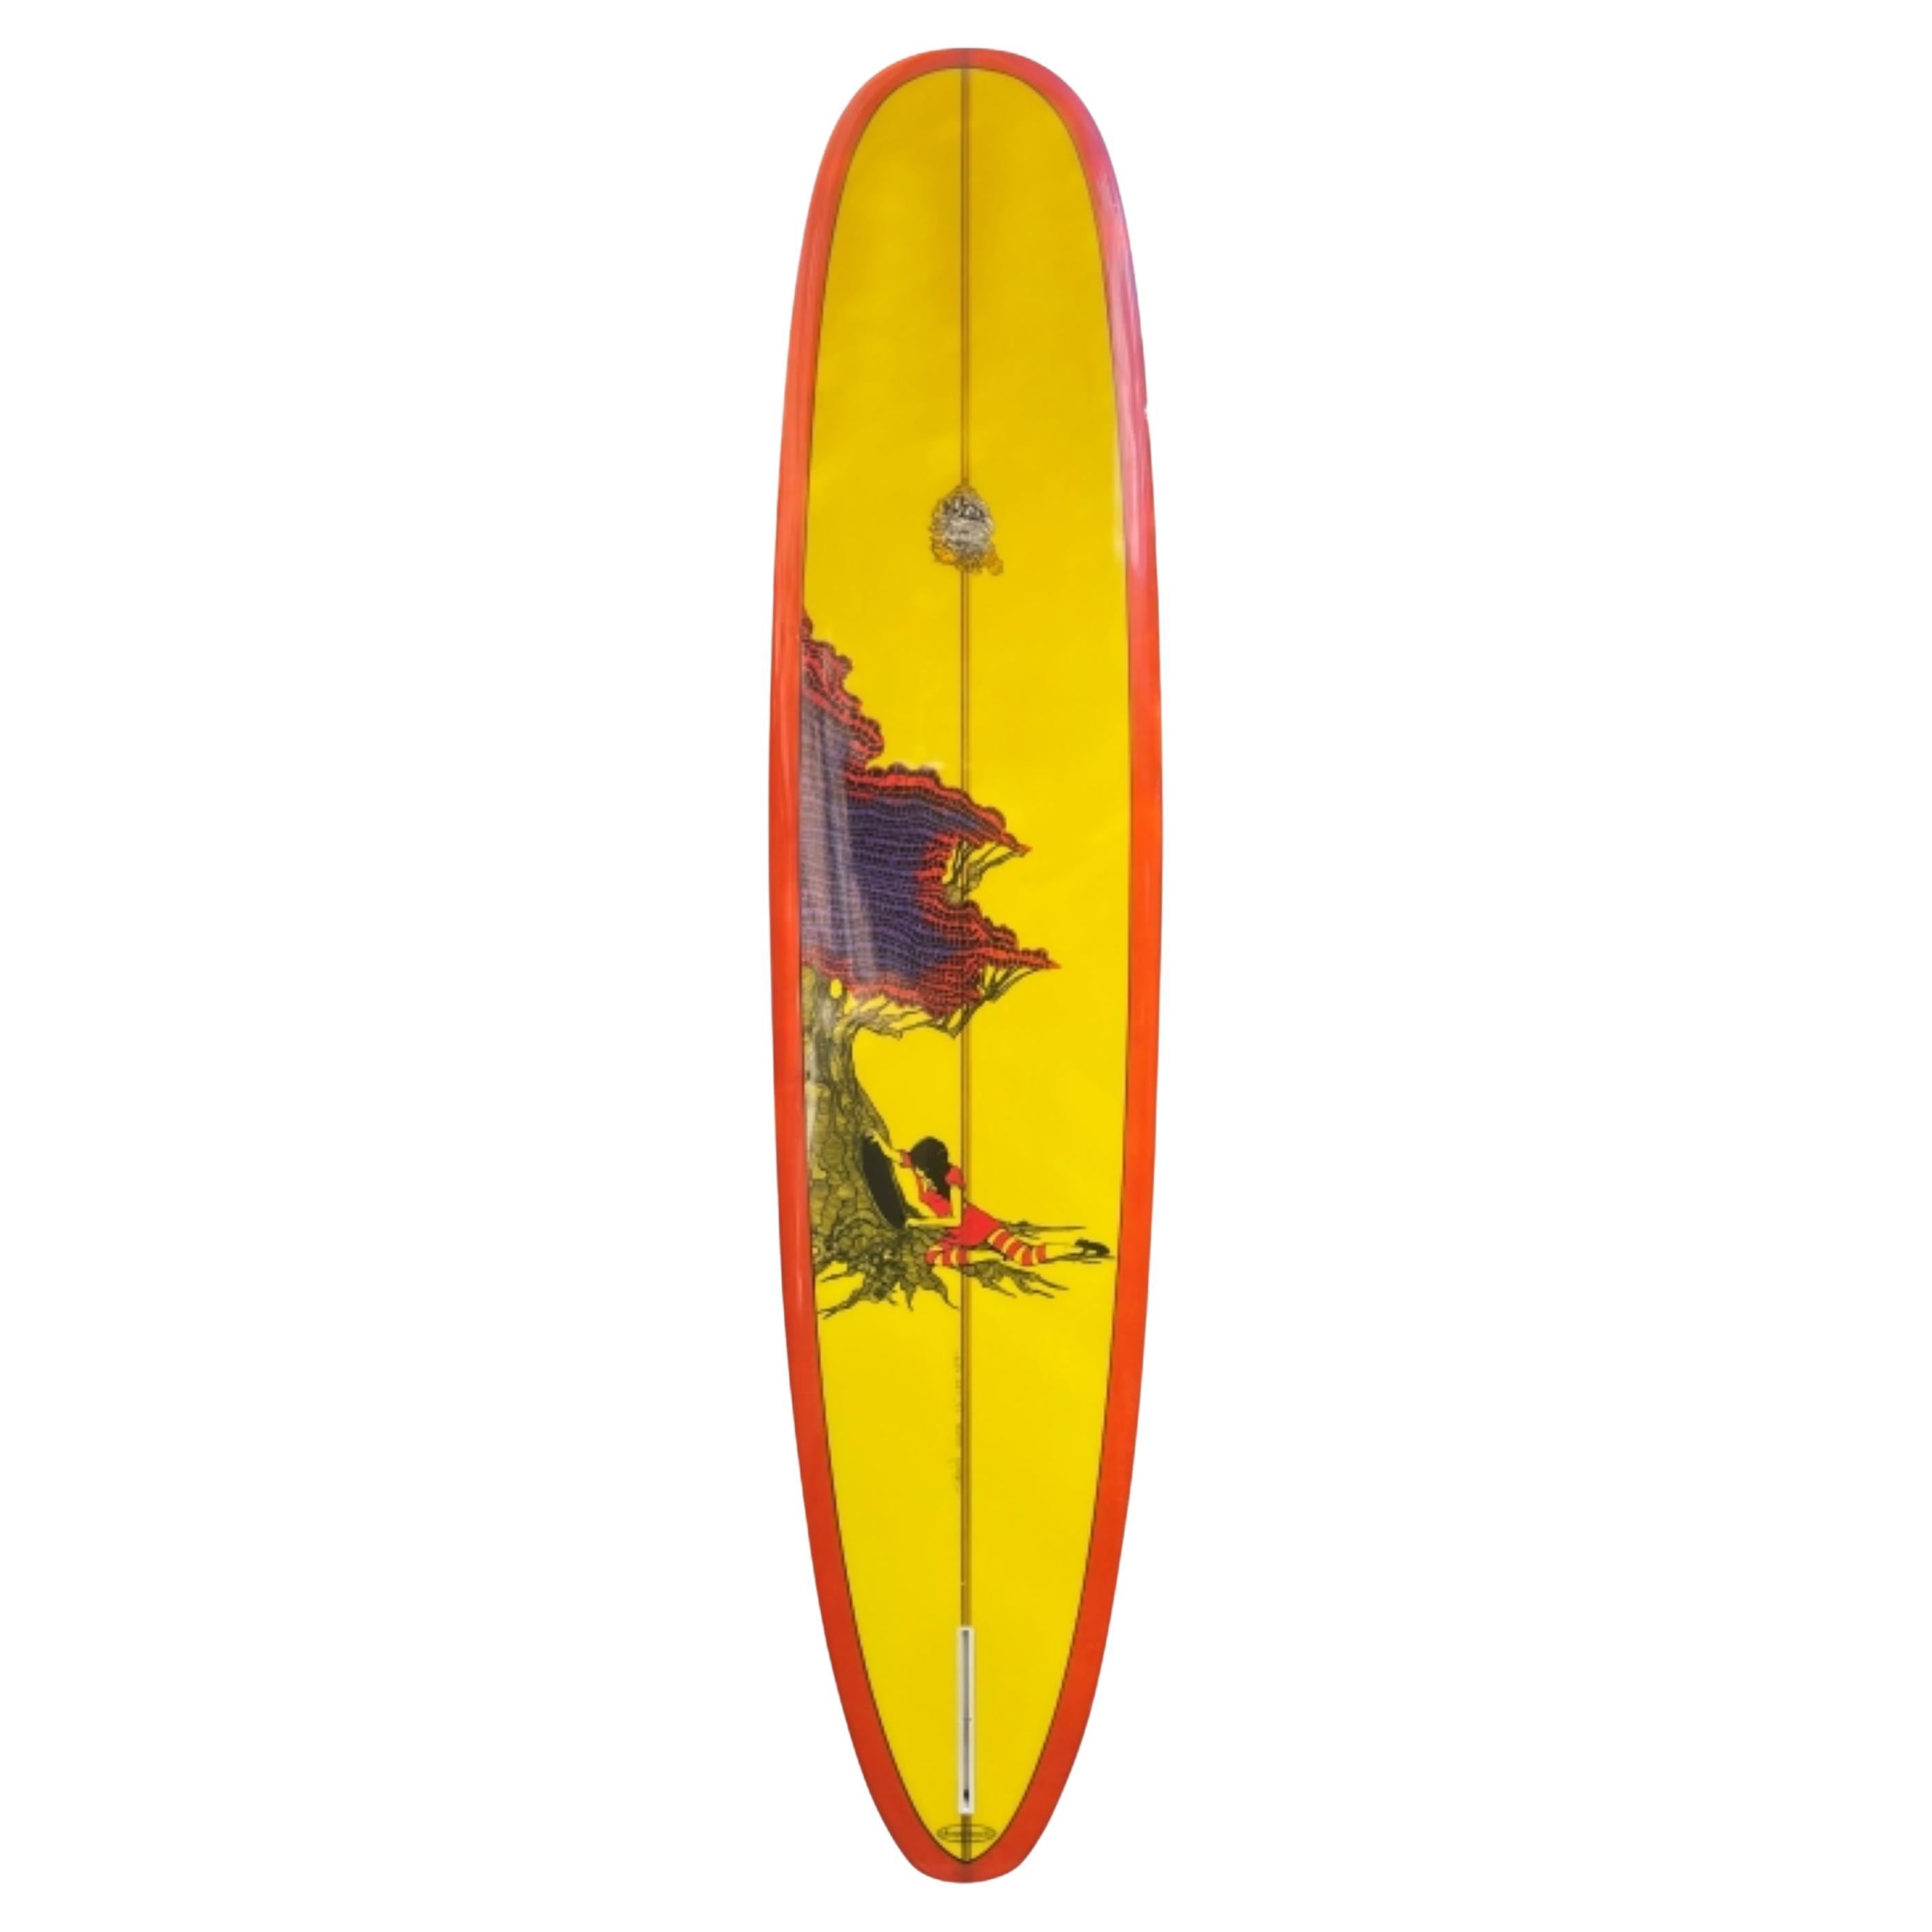 Hobie Surfboards Longboard Tyler Warren, Kunstwerk in Form des späten Terry Martin